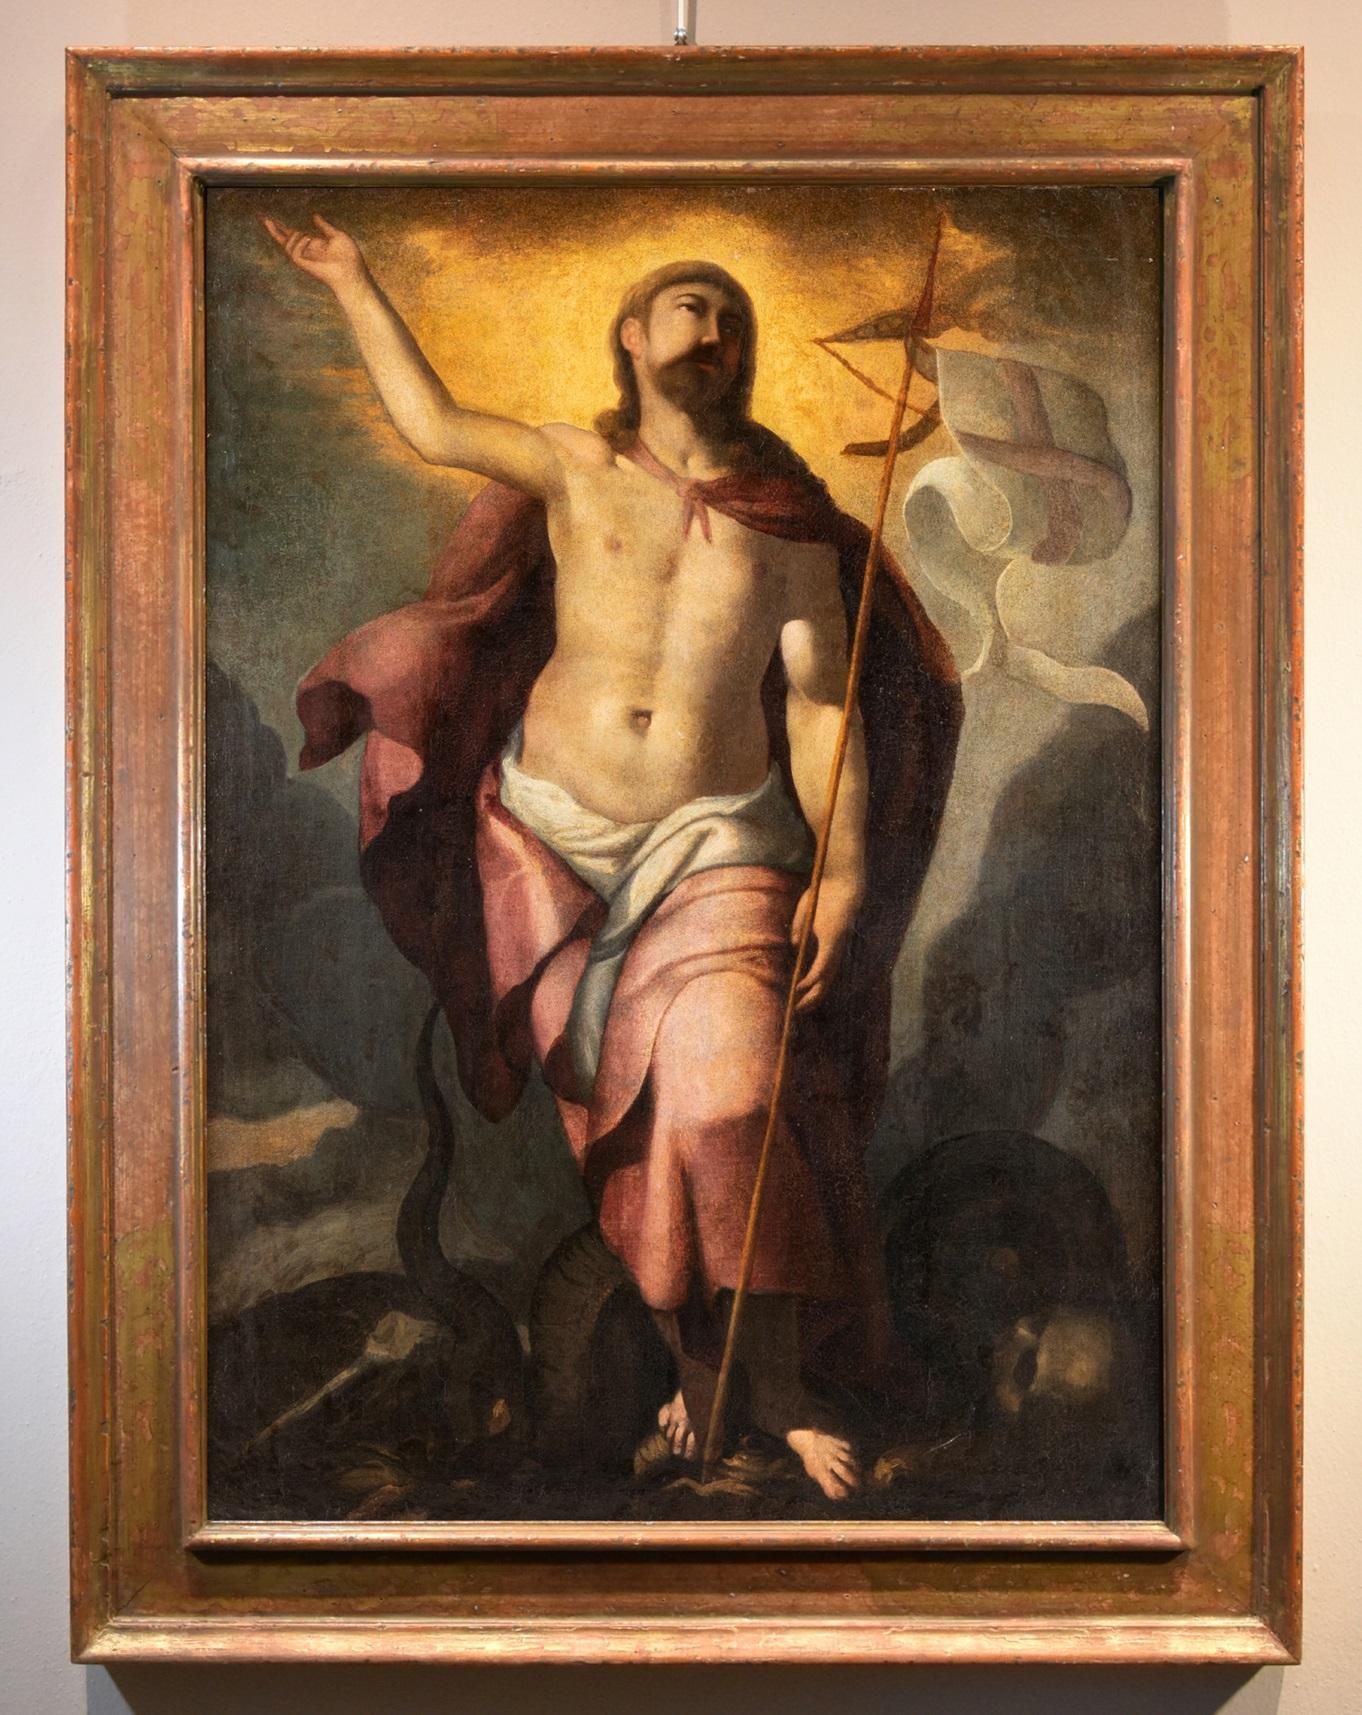 Tiziano Vecellio (Pieve di Cadore 1490 - Venice 1576) Portrait Painting - Resurrection Christ Tiziano 16/17th Century paint Oil on canvas Old master Italy